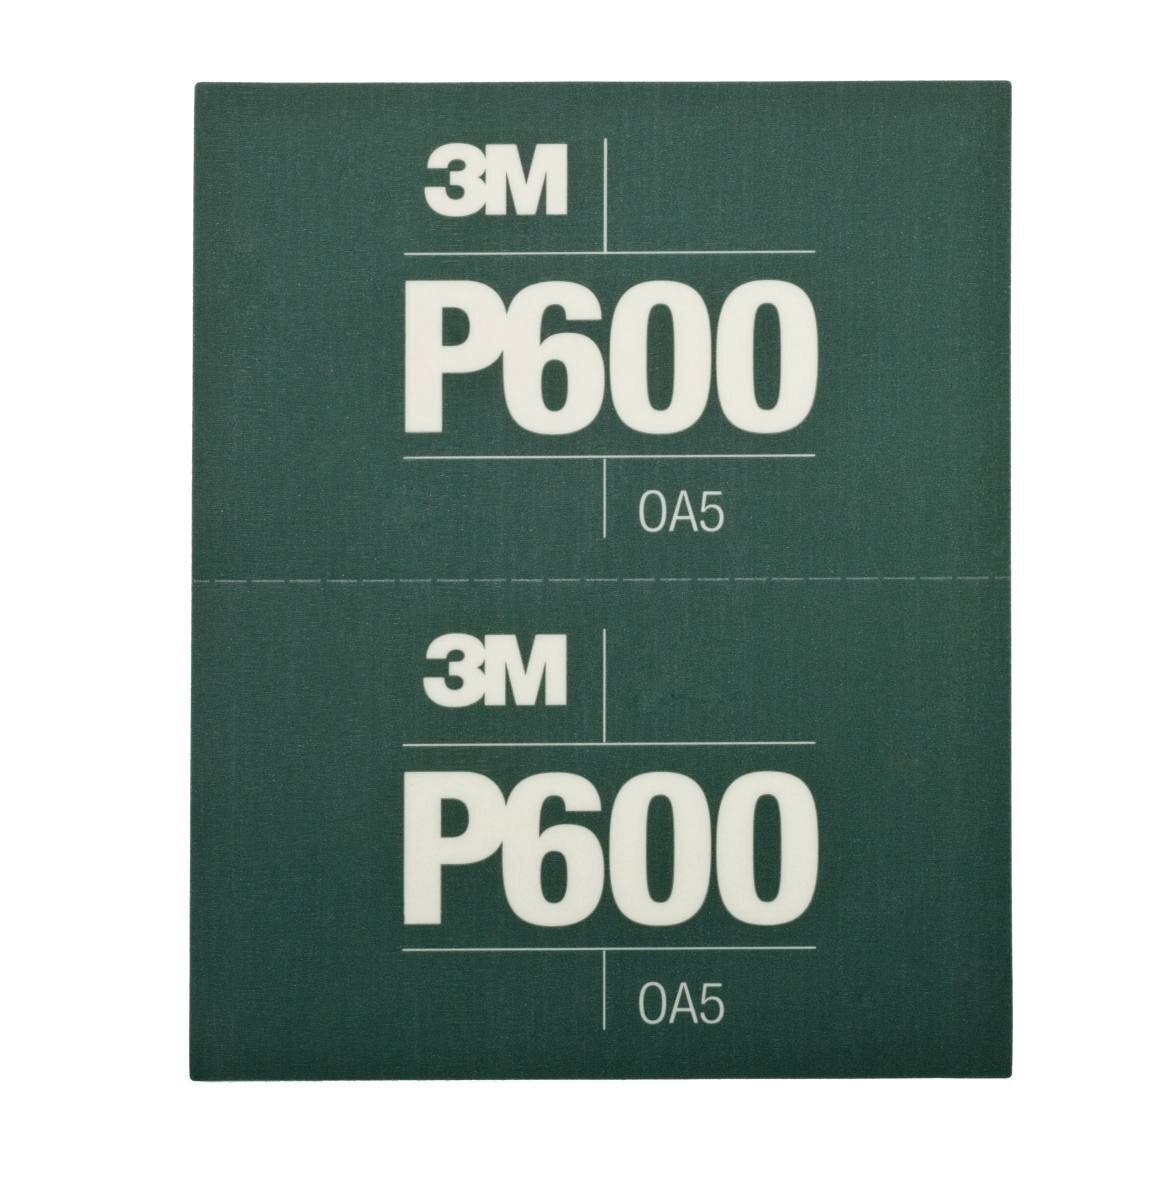 3M Hookit Flexible sanding strips, green, 140 mm x 171 mm, P600, 25 pieces / box